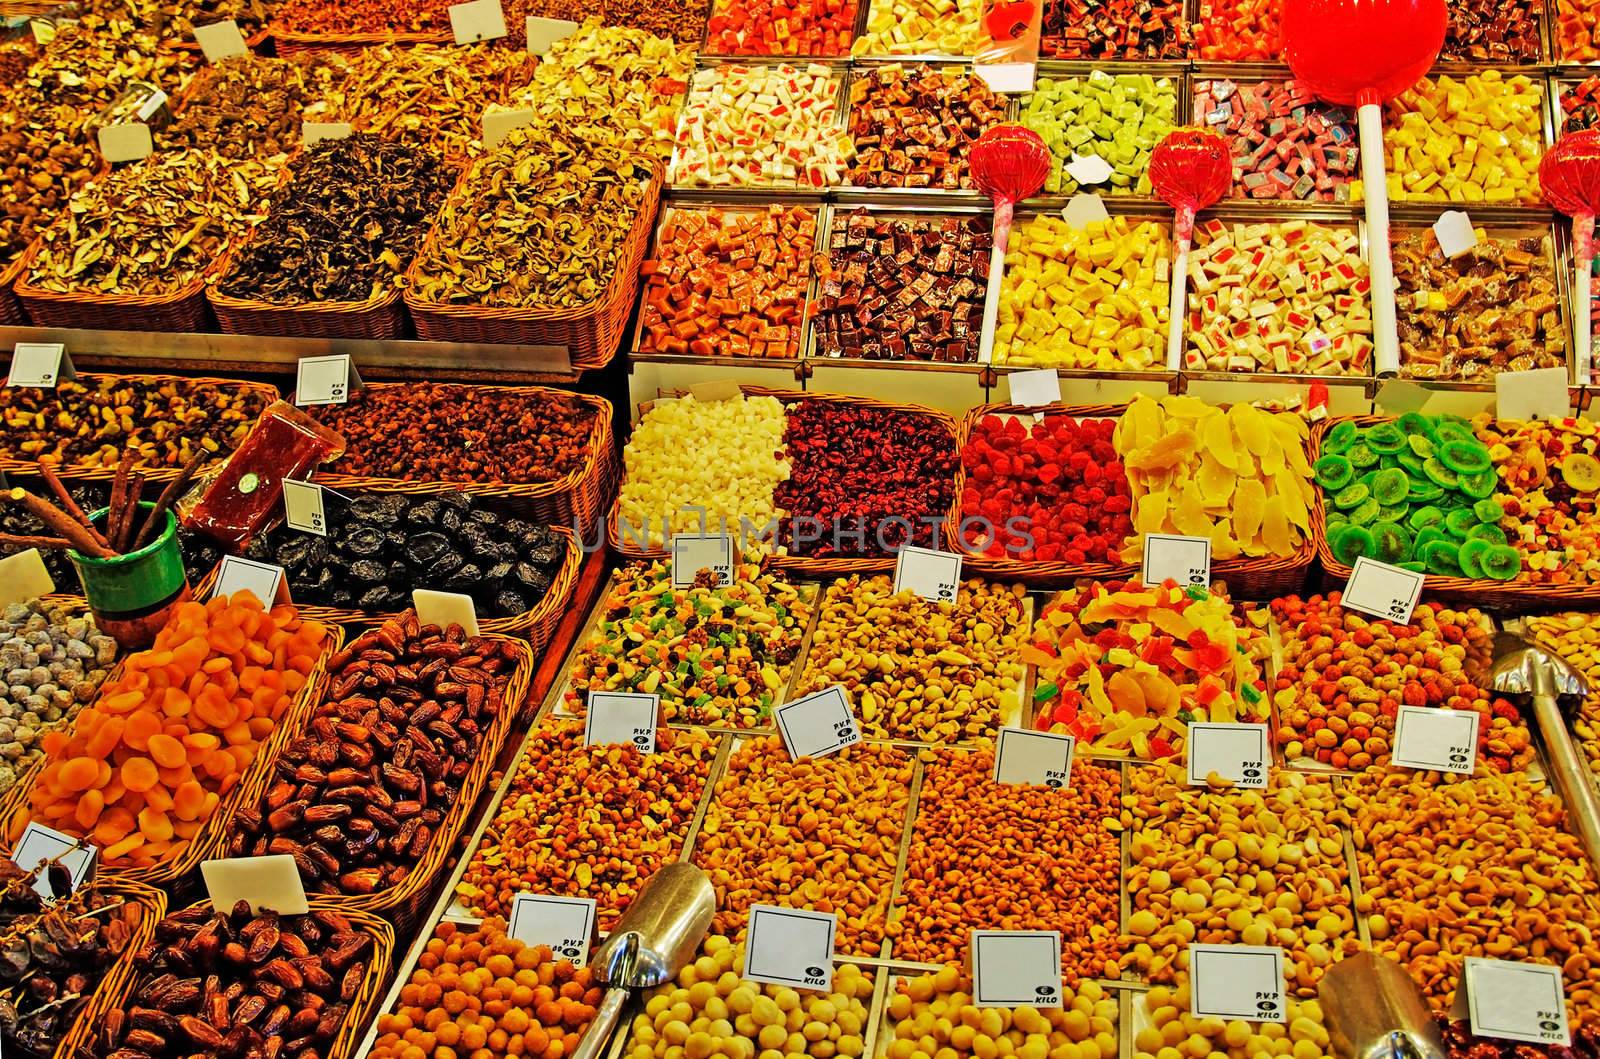 Abundance of nuts, fruits, sweet things at Barcelona market.